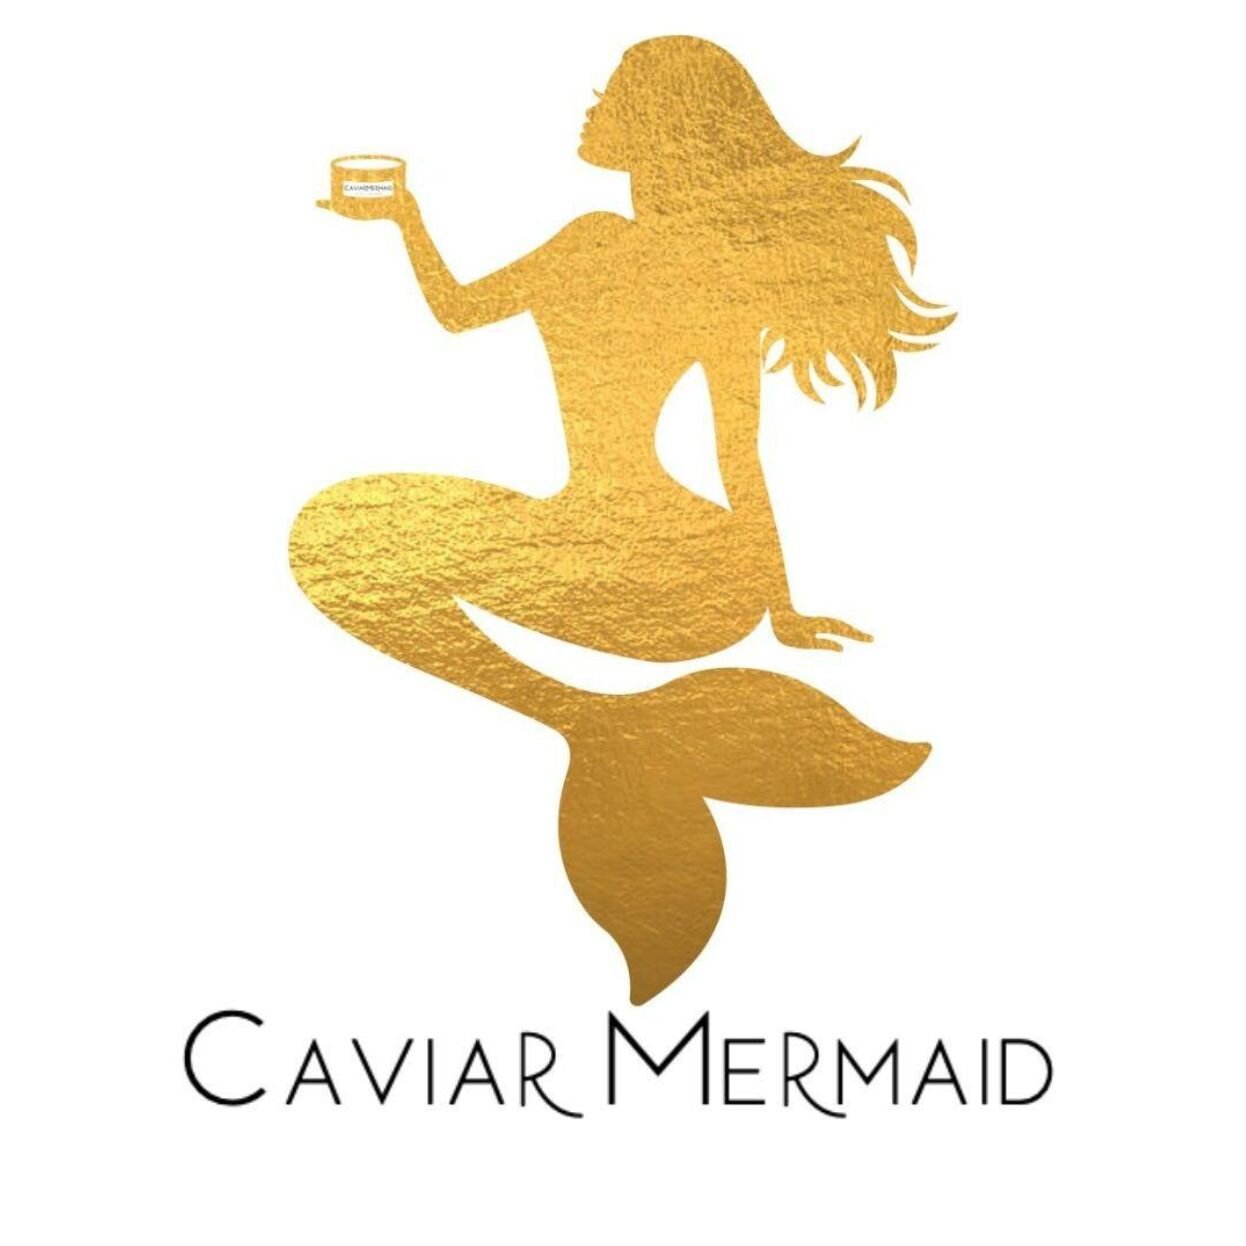 Caviar mermaid mobile logo